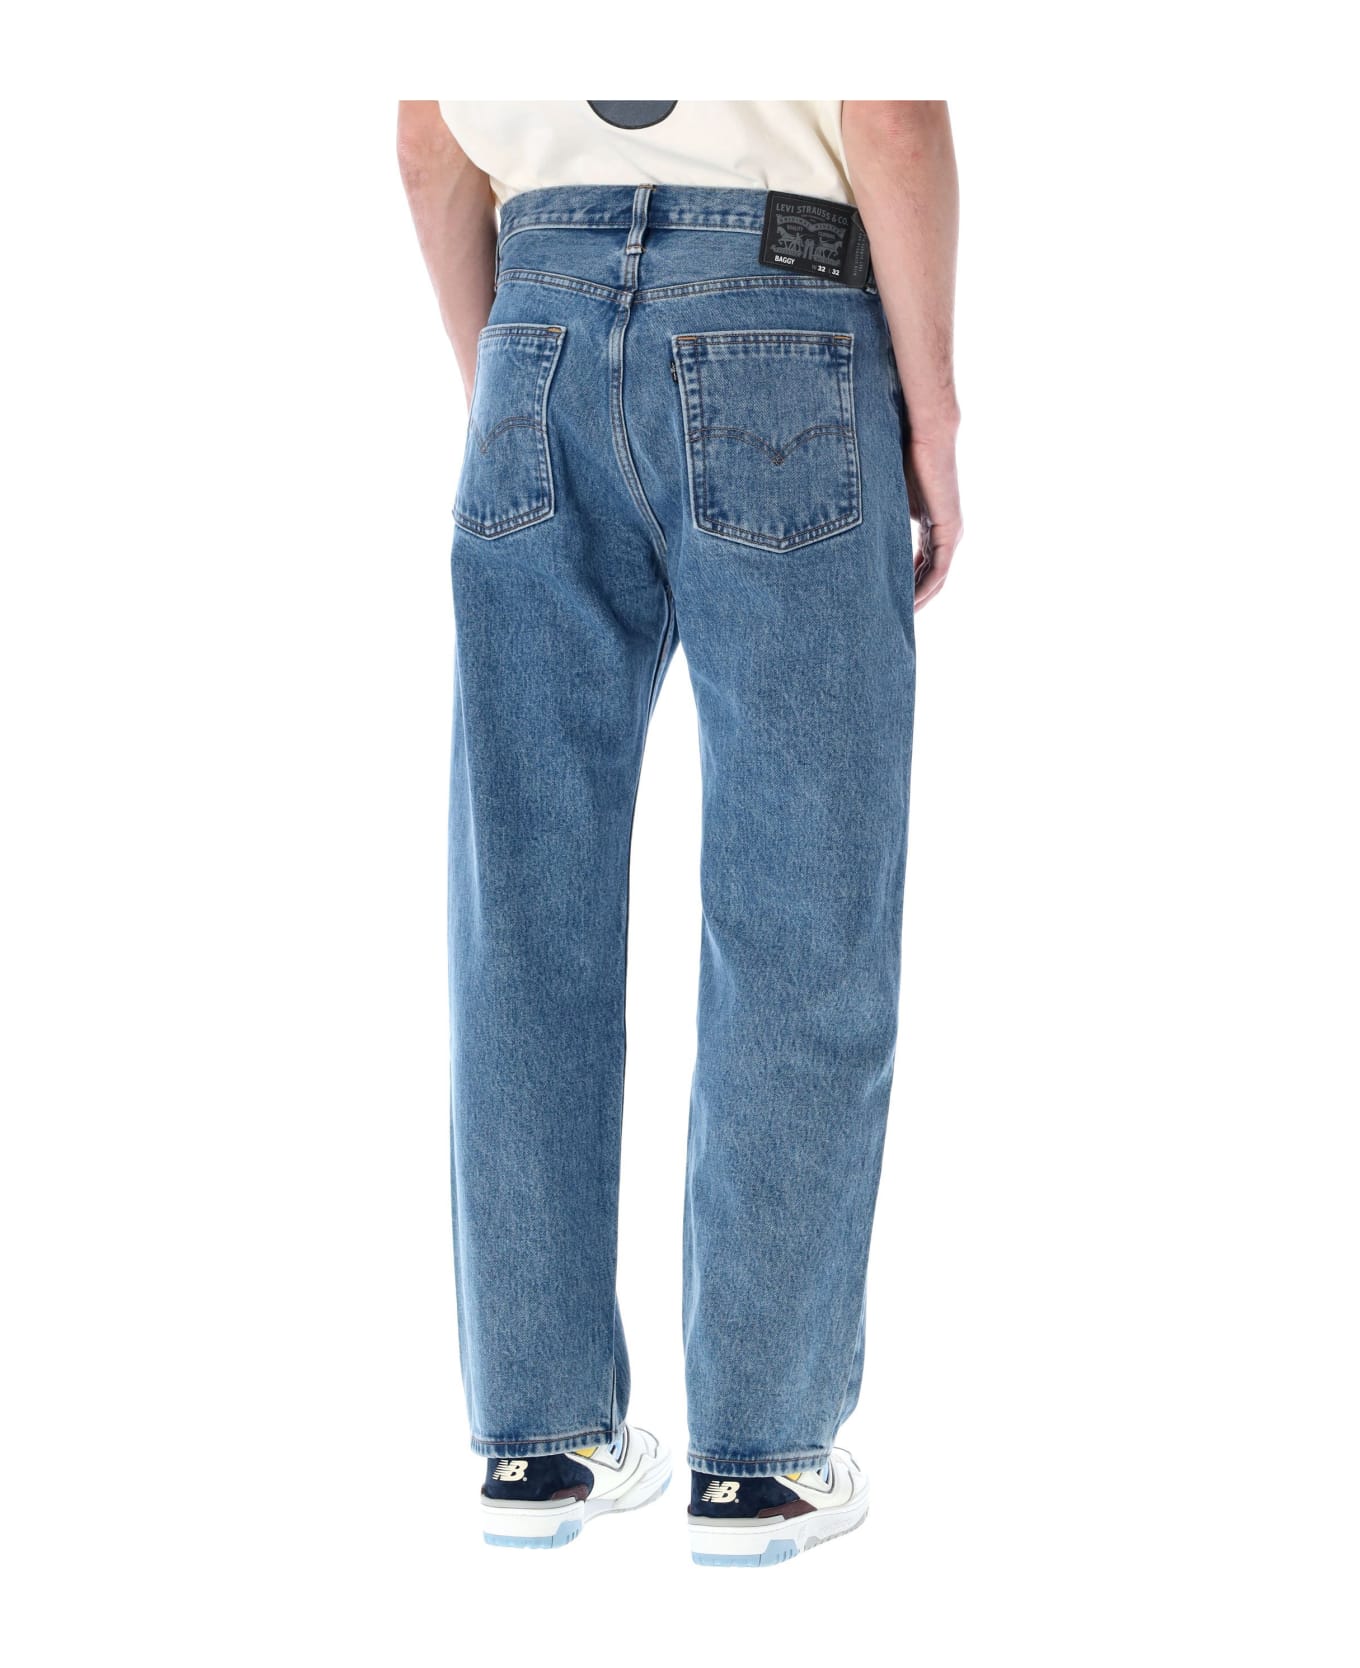 Levi's Baggy Five Pocket Jeans - DEEP GROOVE